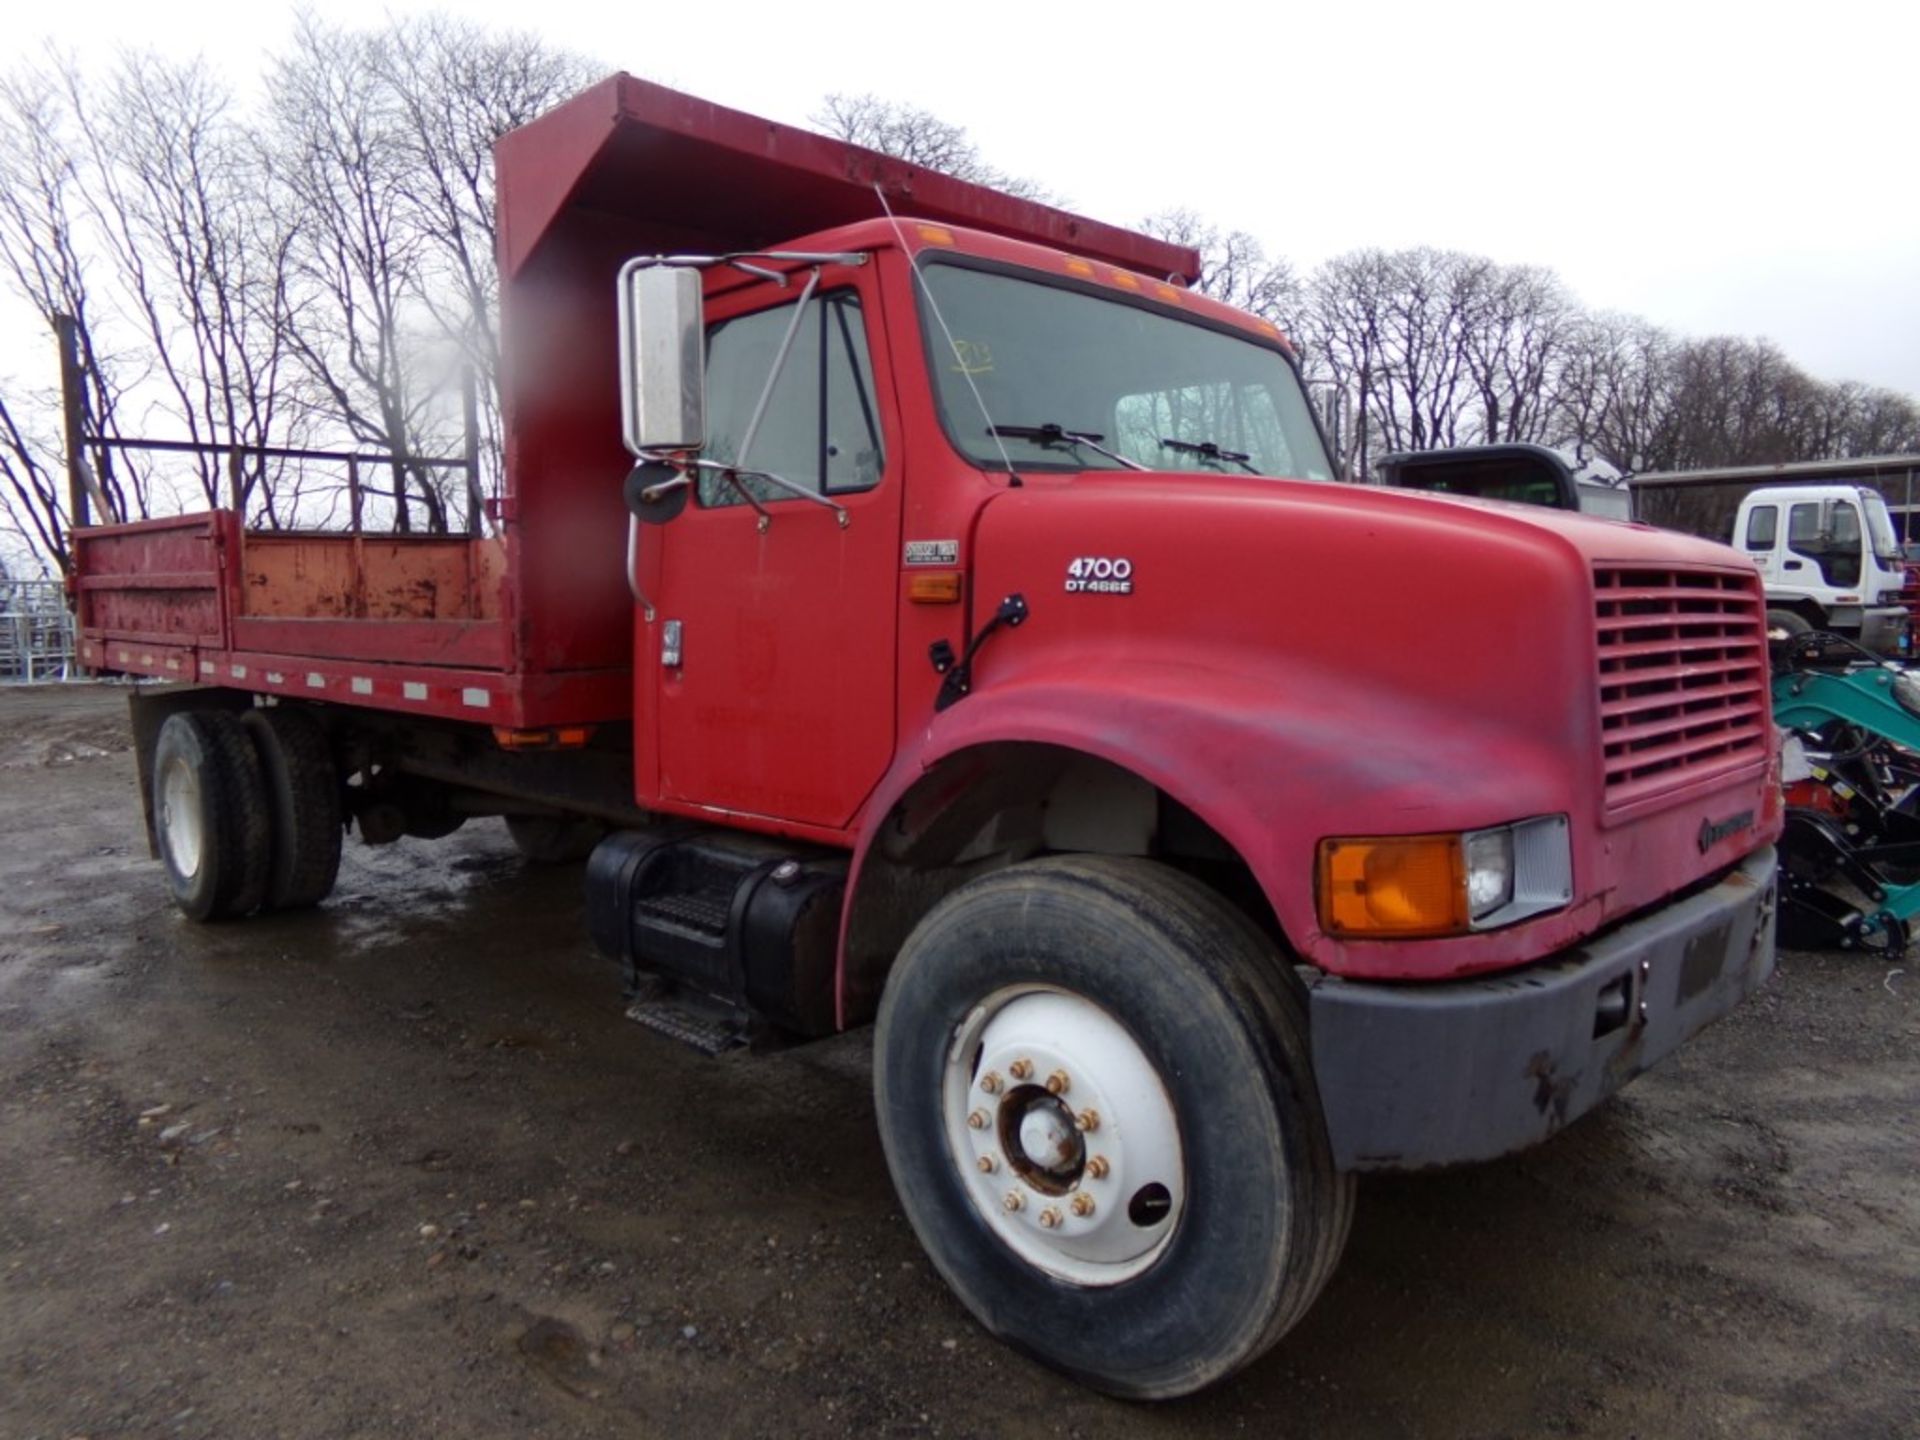 1996 International 4700, S/A Dump Truck, Red, Extra-Long Landscaper Dump Box w/Drop Down Sides, - Image 4 of 11